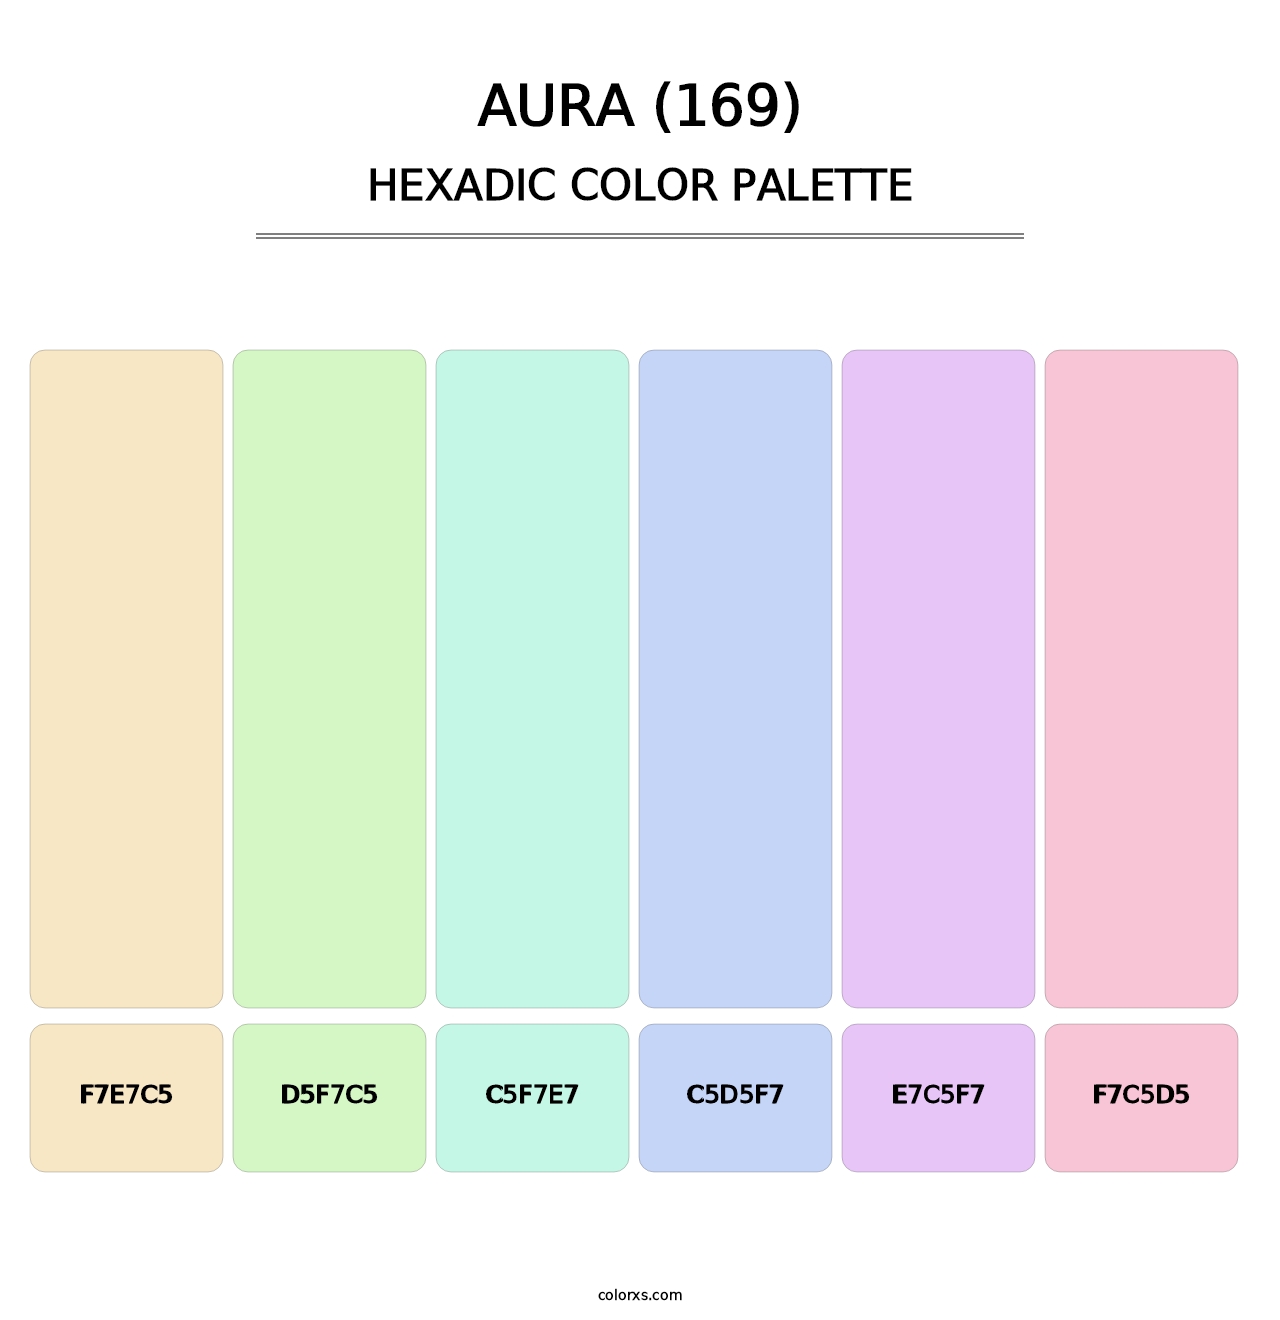 Aura (169) - Hexadic Color Palette